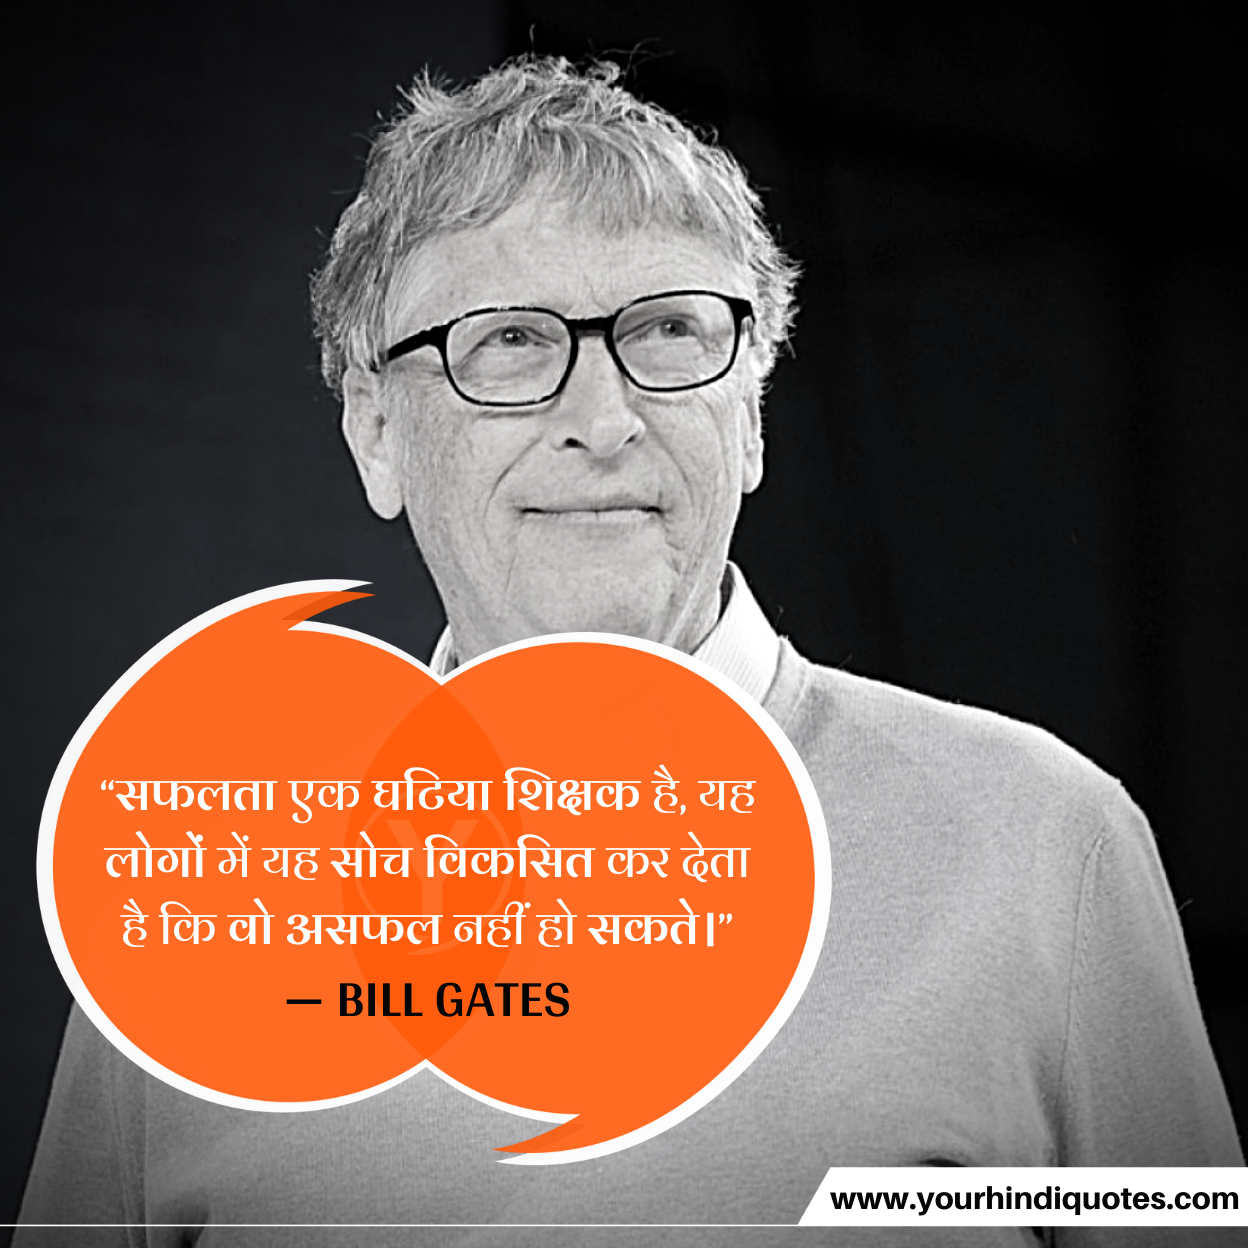 Bill Gates Quotes Image